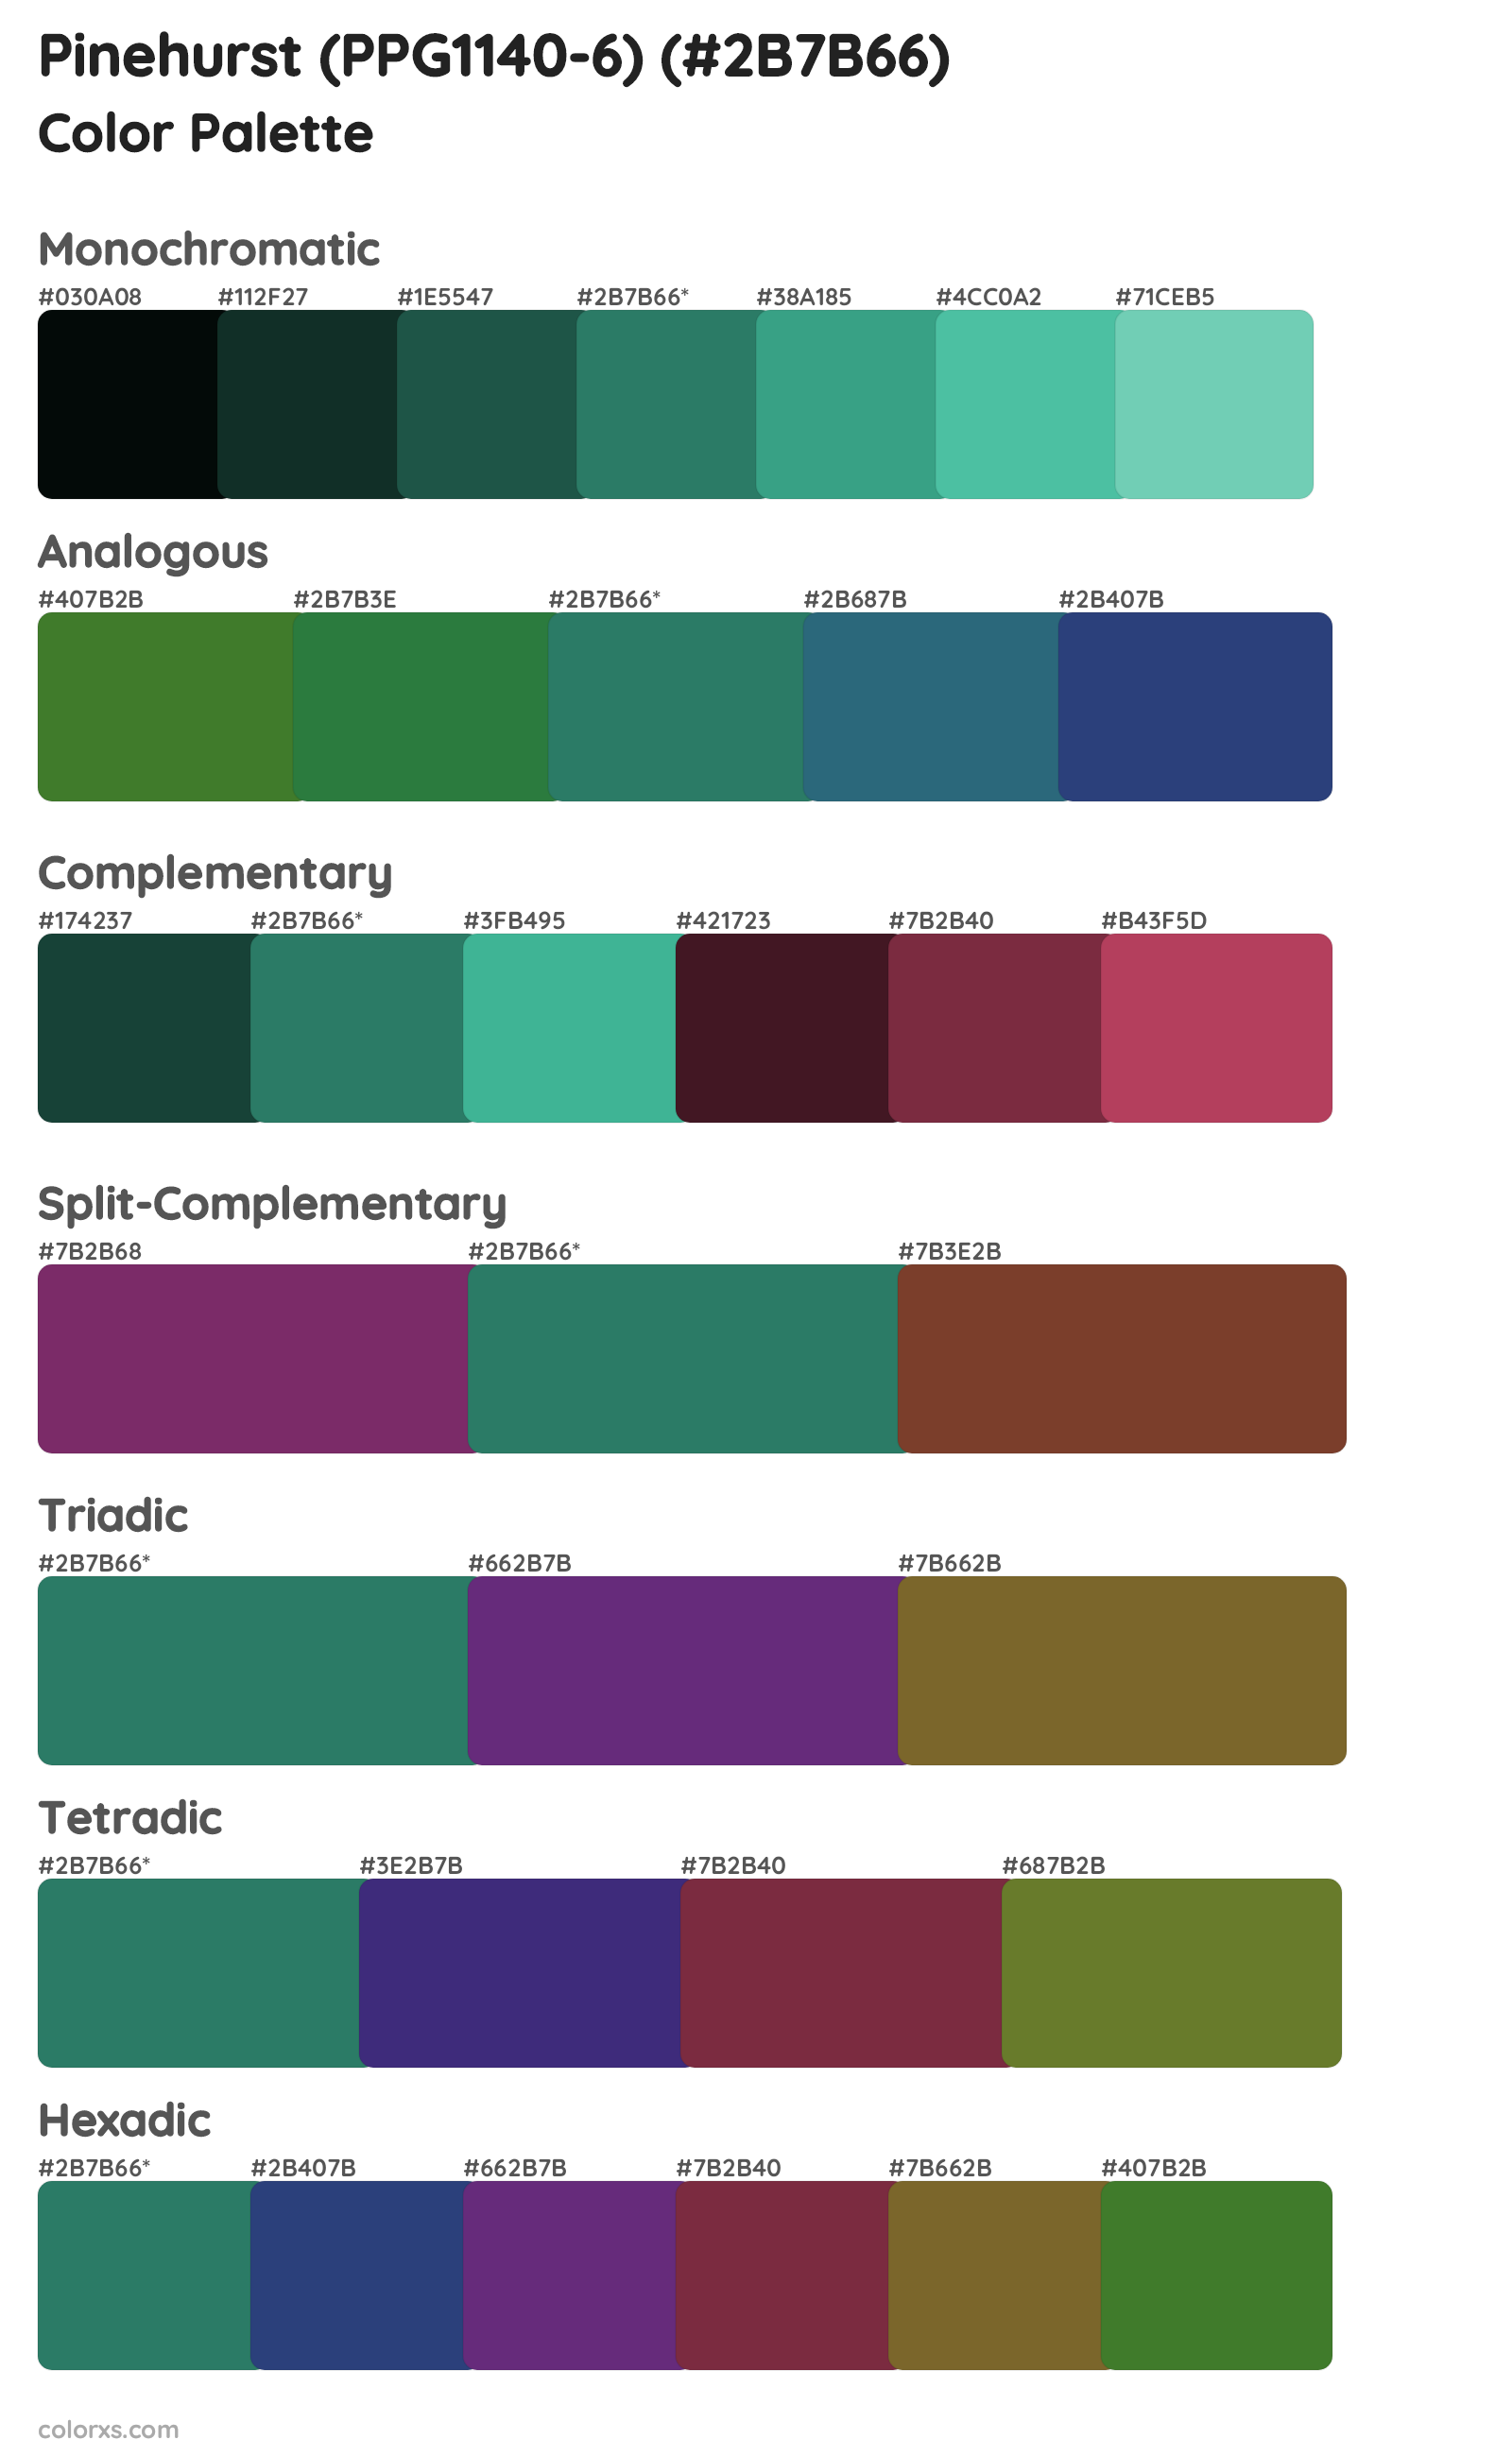 Pinehurst (PPG1140-6) Color Scheme Palettes